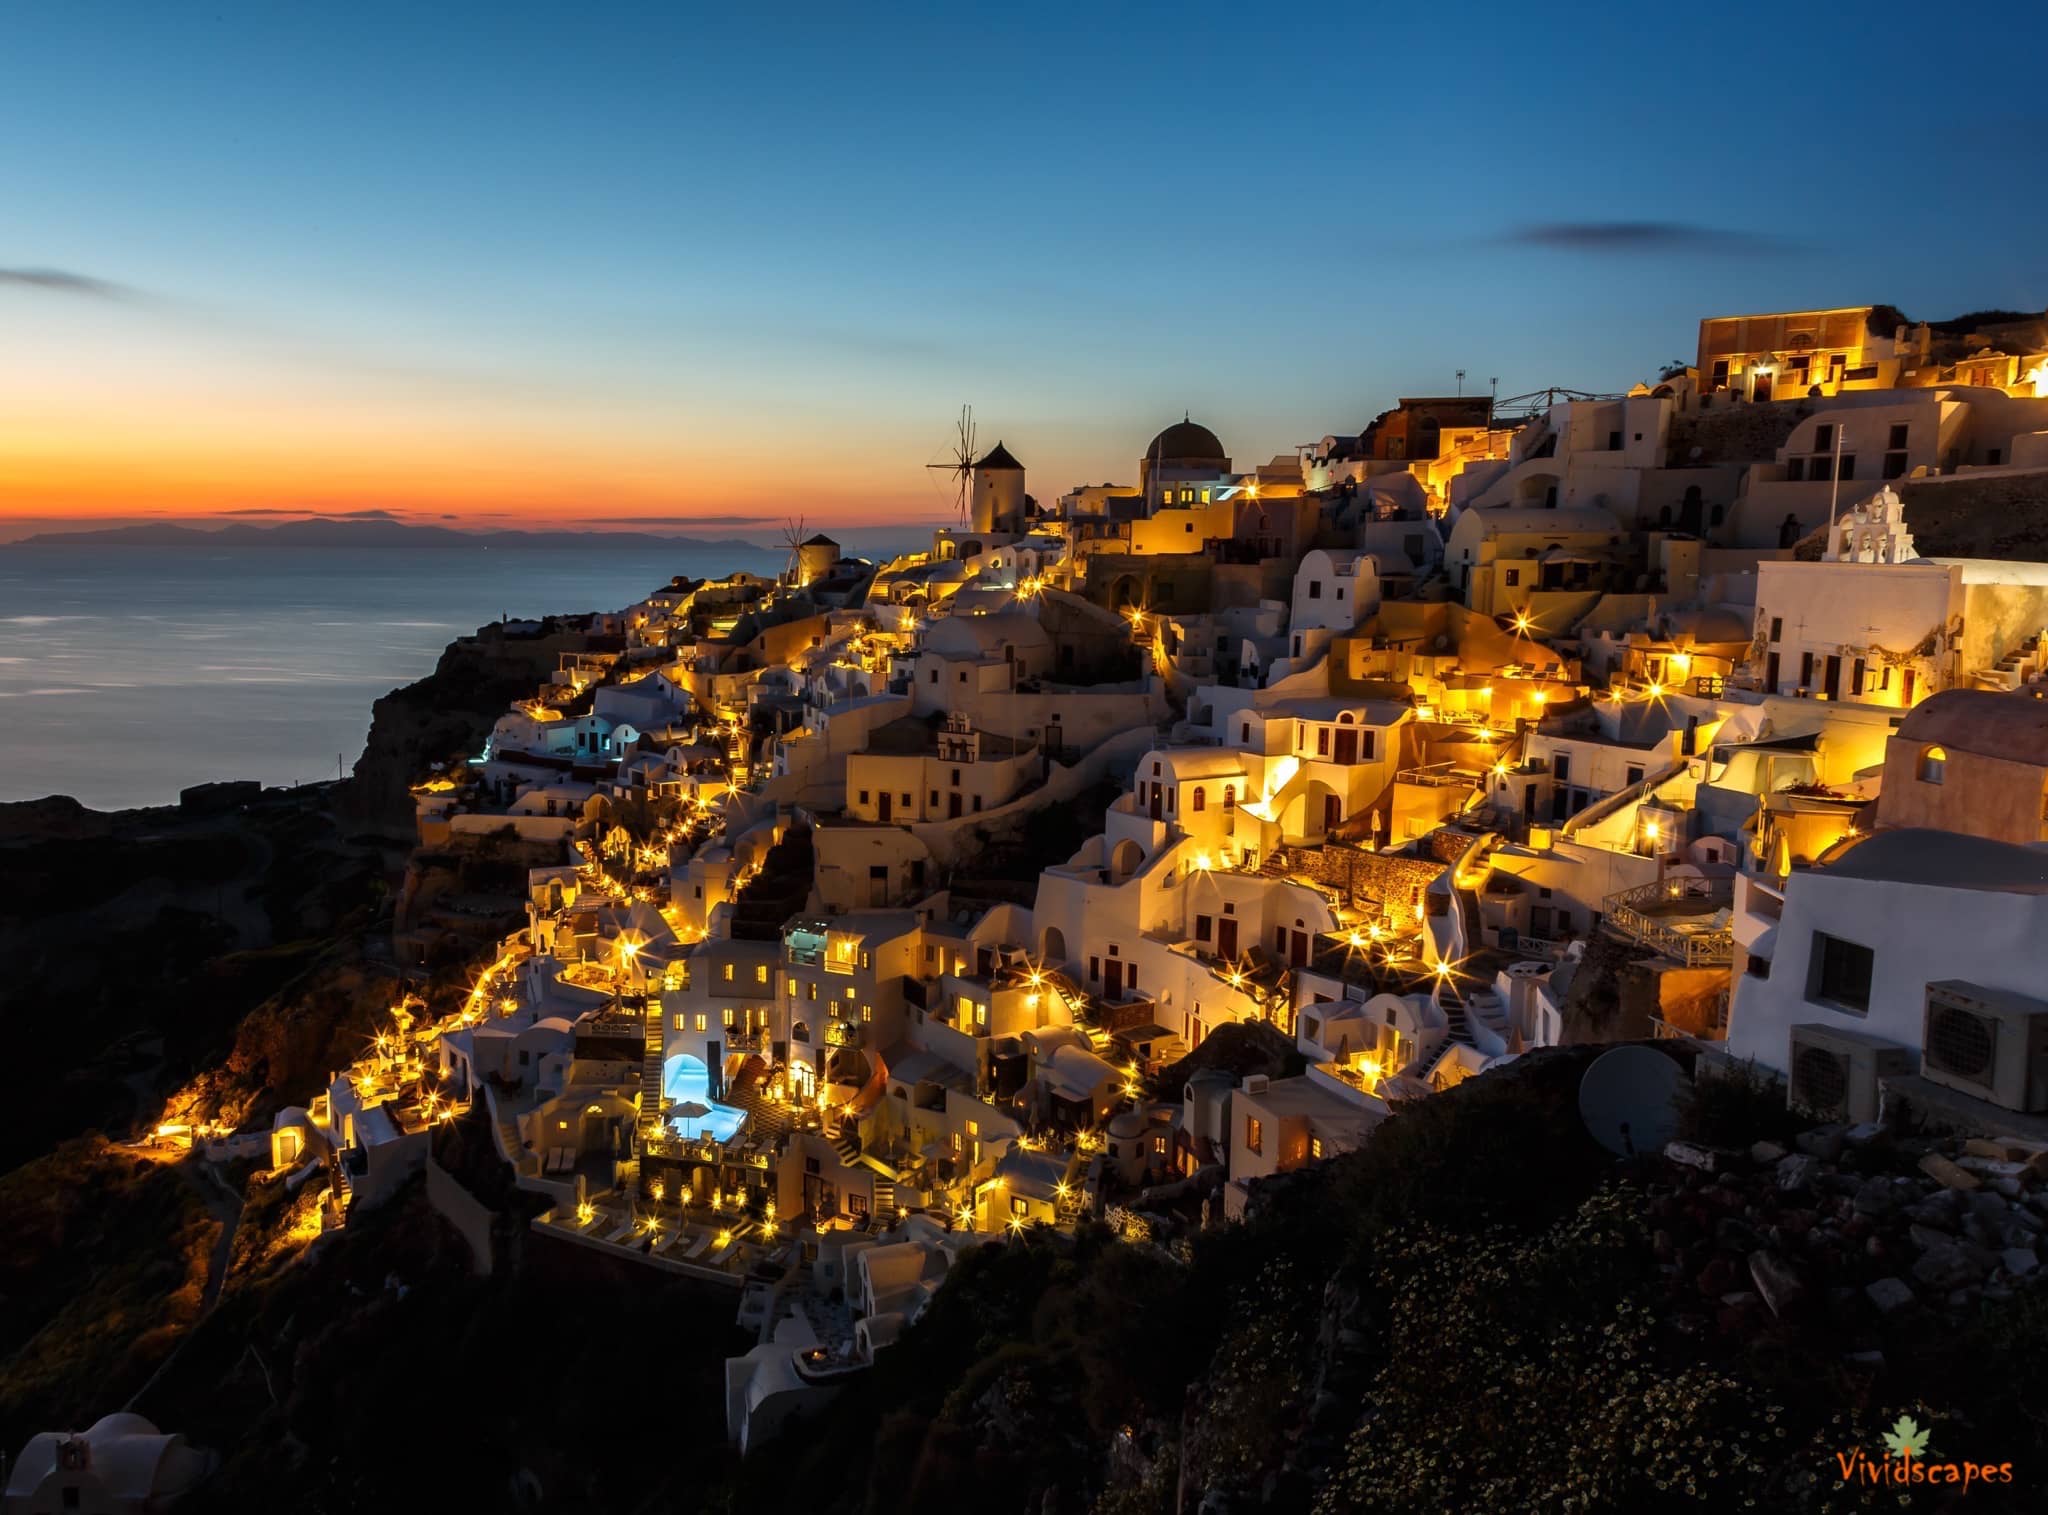 Getting That Postcard Shot Of Santorini – A Photo Guide